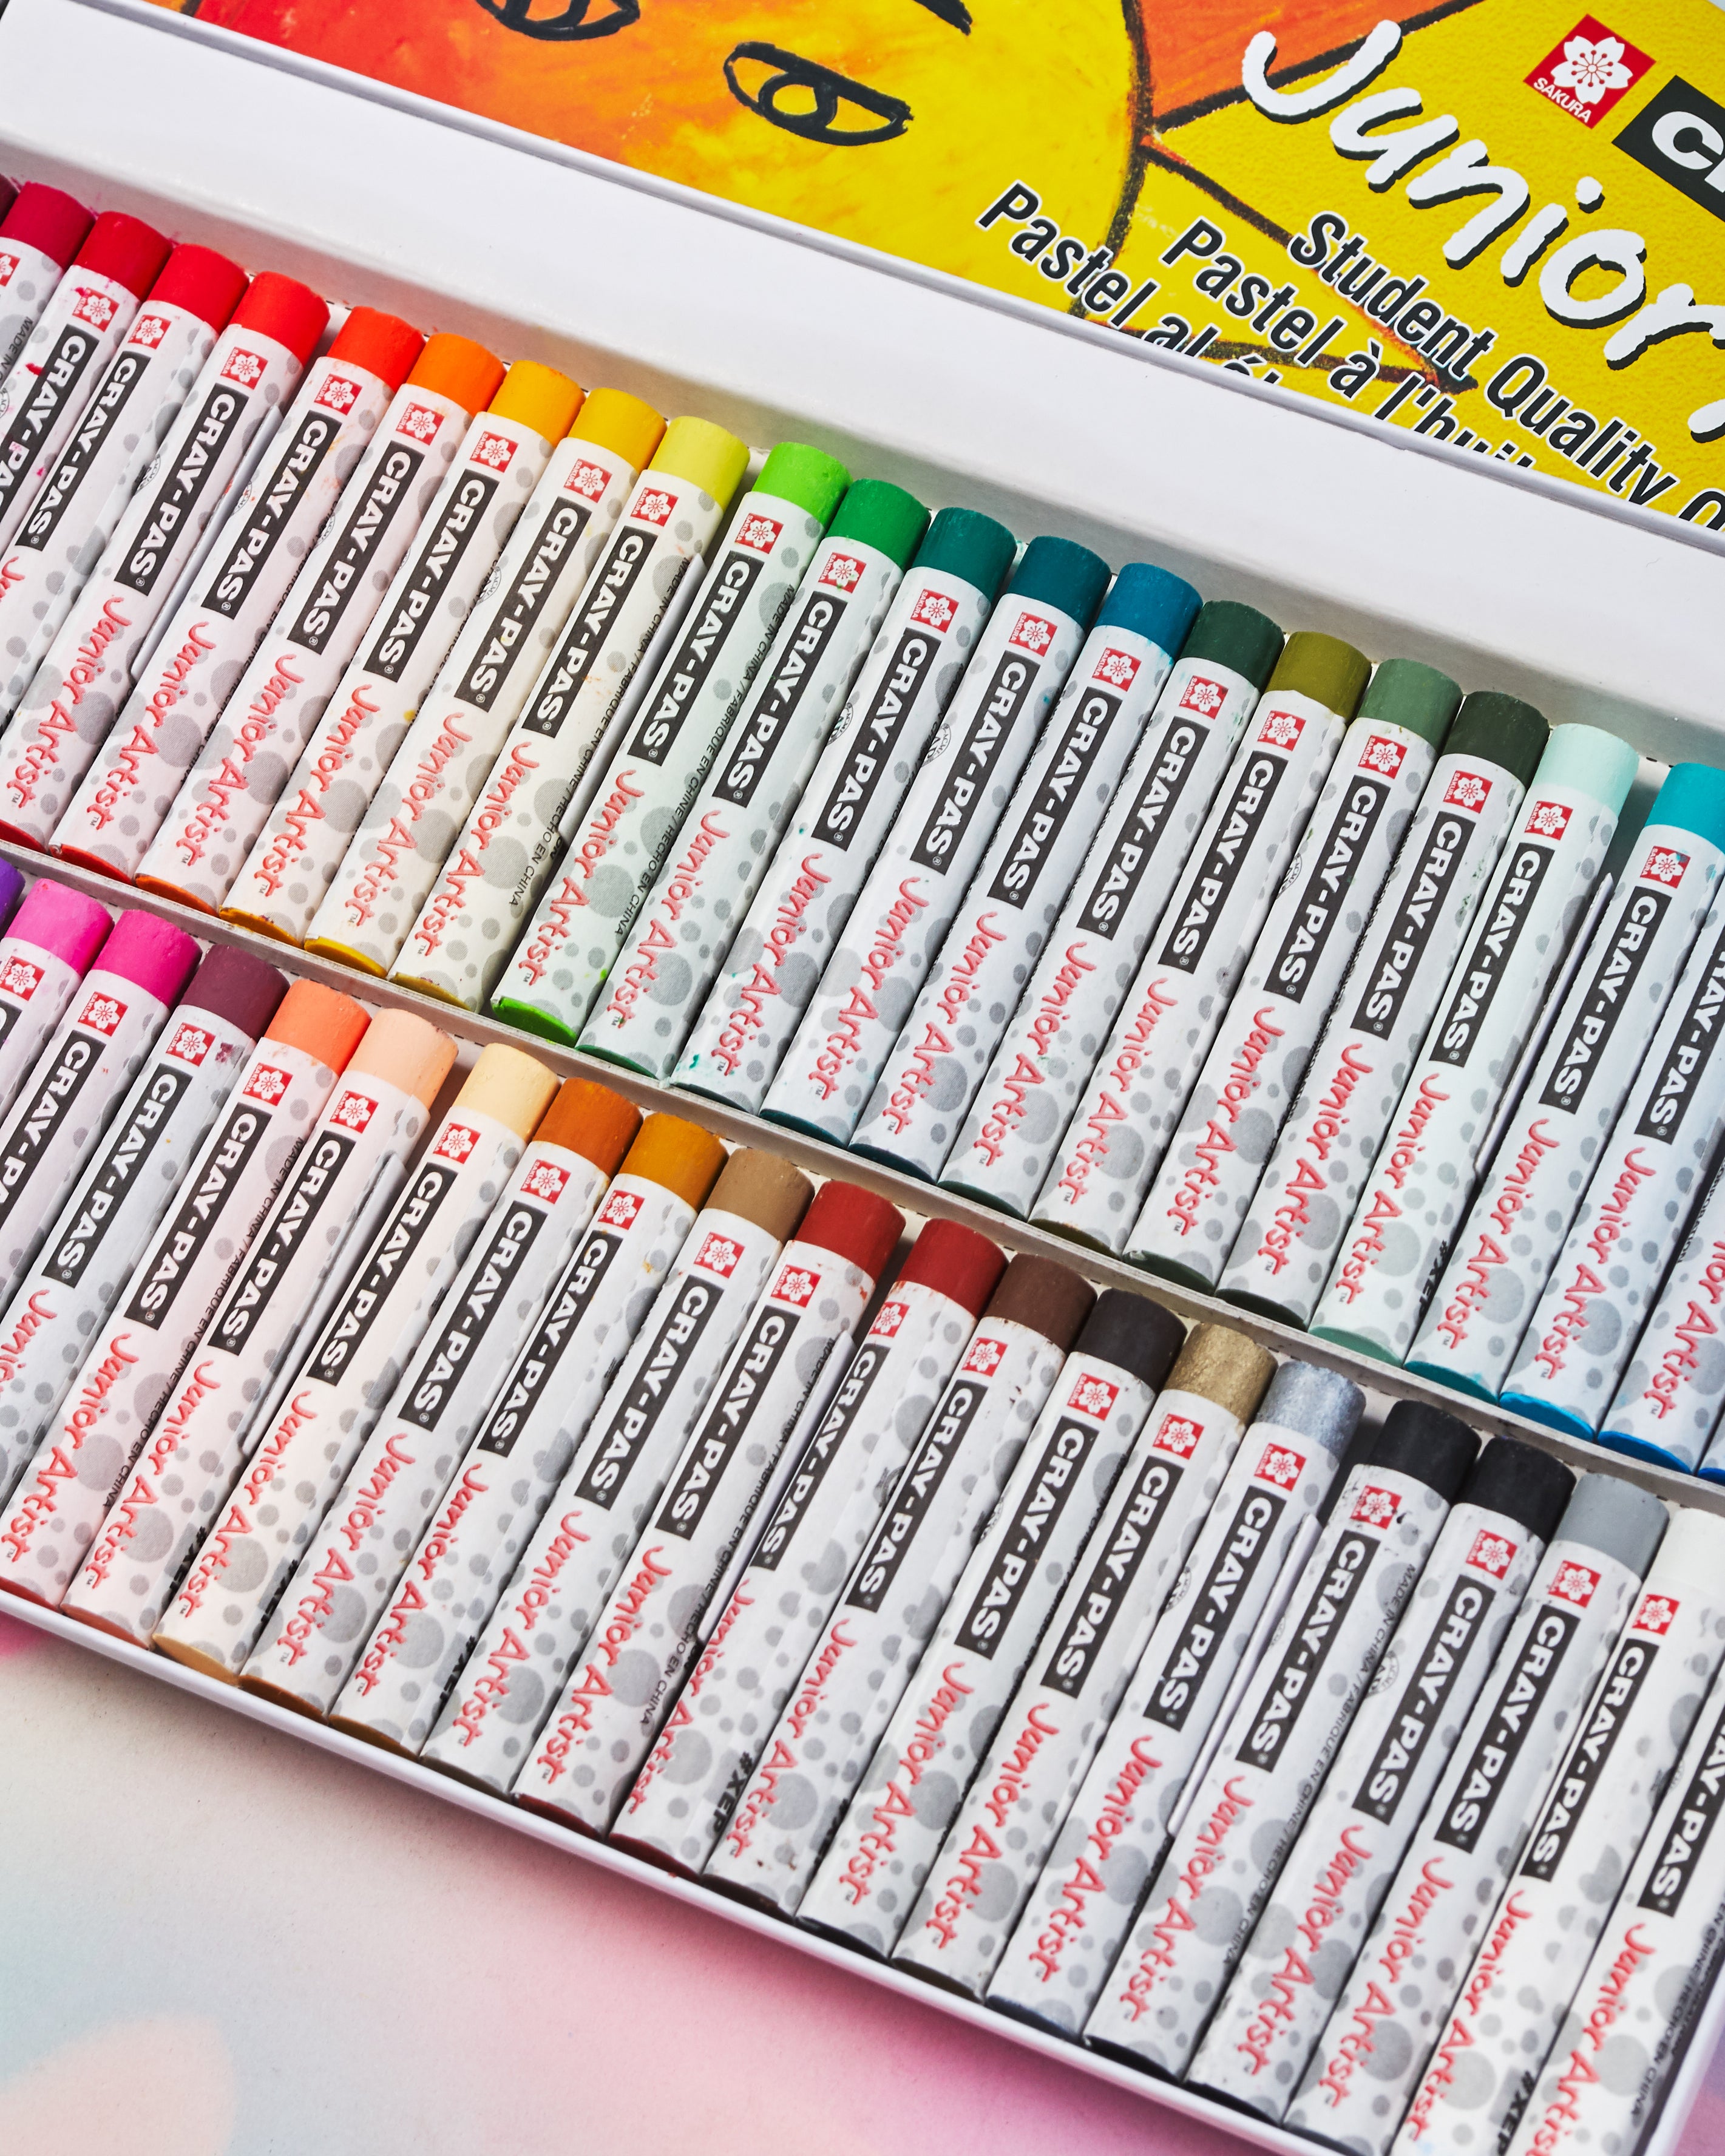 Sakura Craypas Junior Artist Oil Pastels, 25 Colors